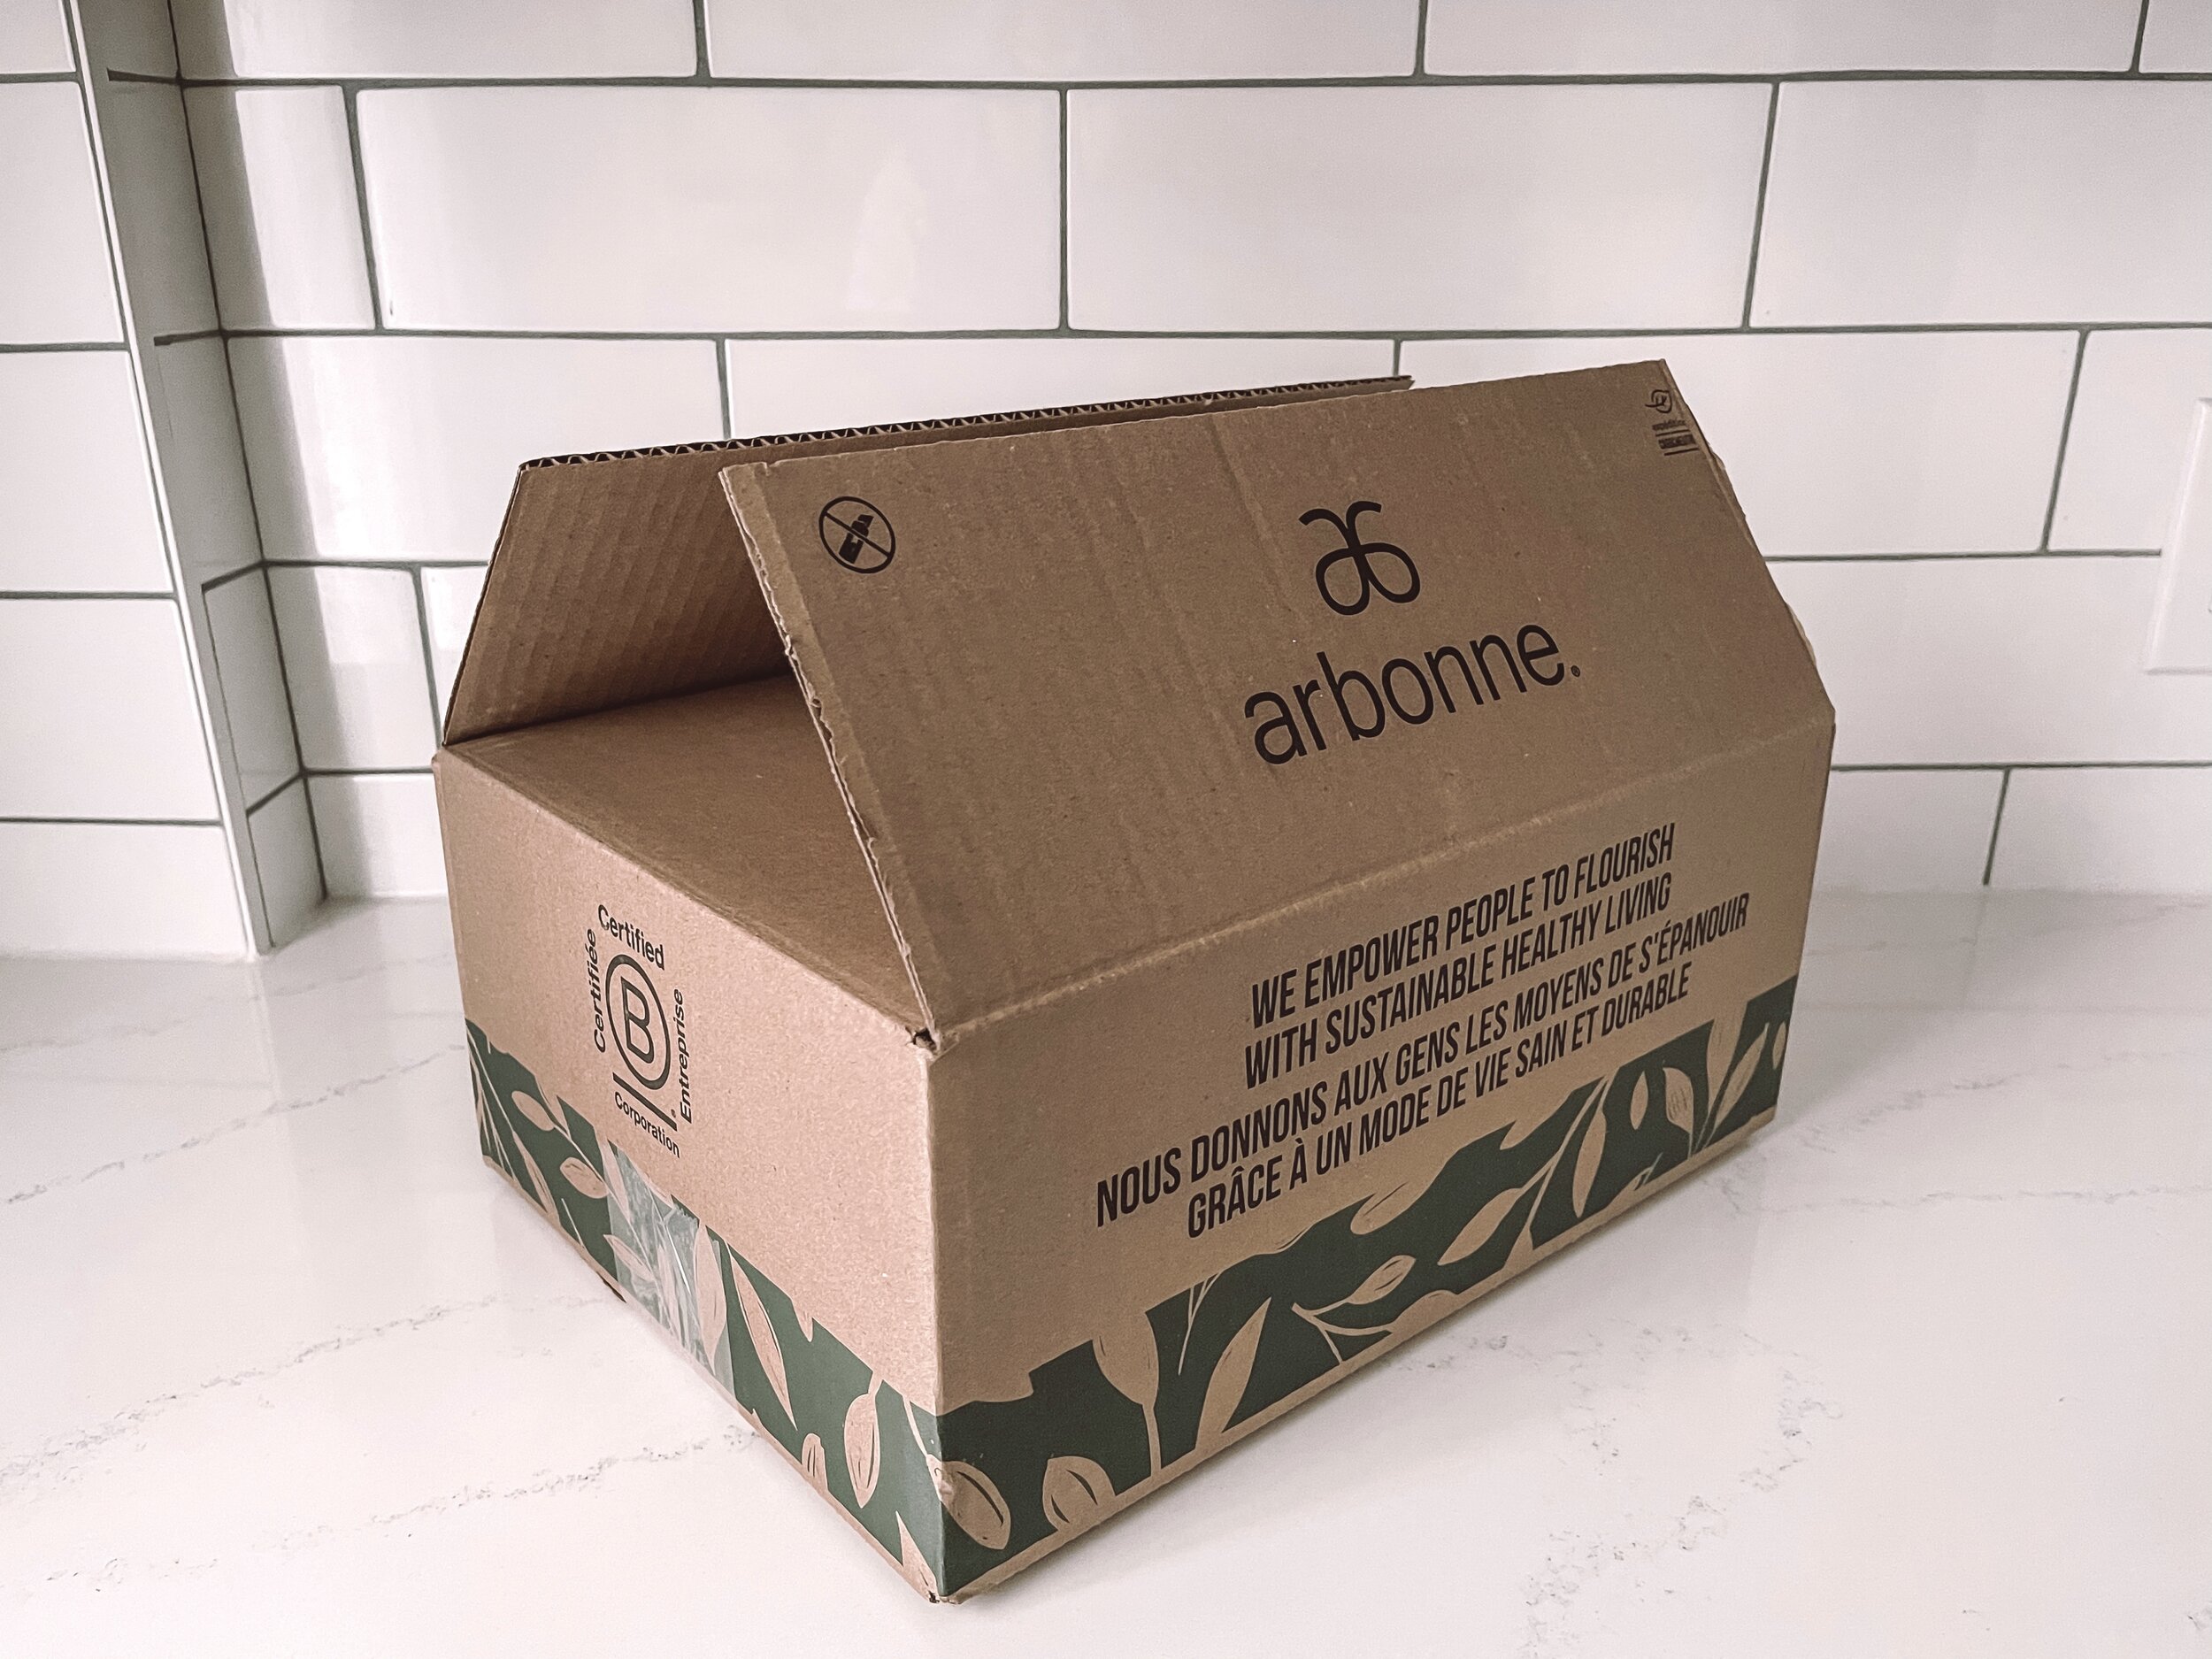 Arbonne Box.JPEG